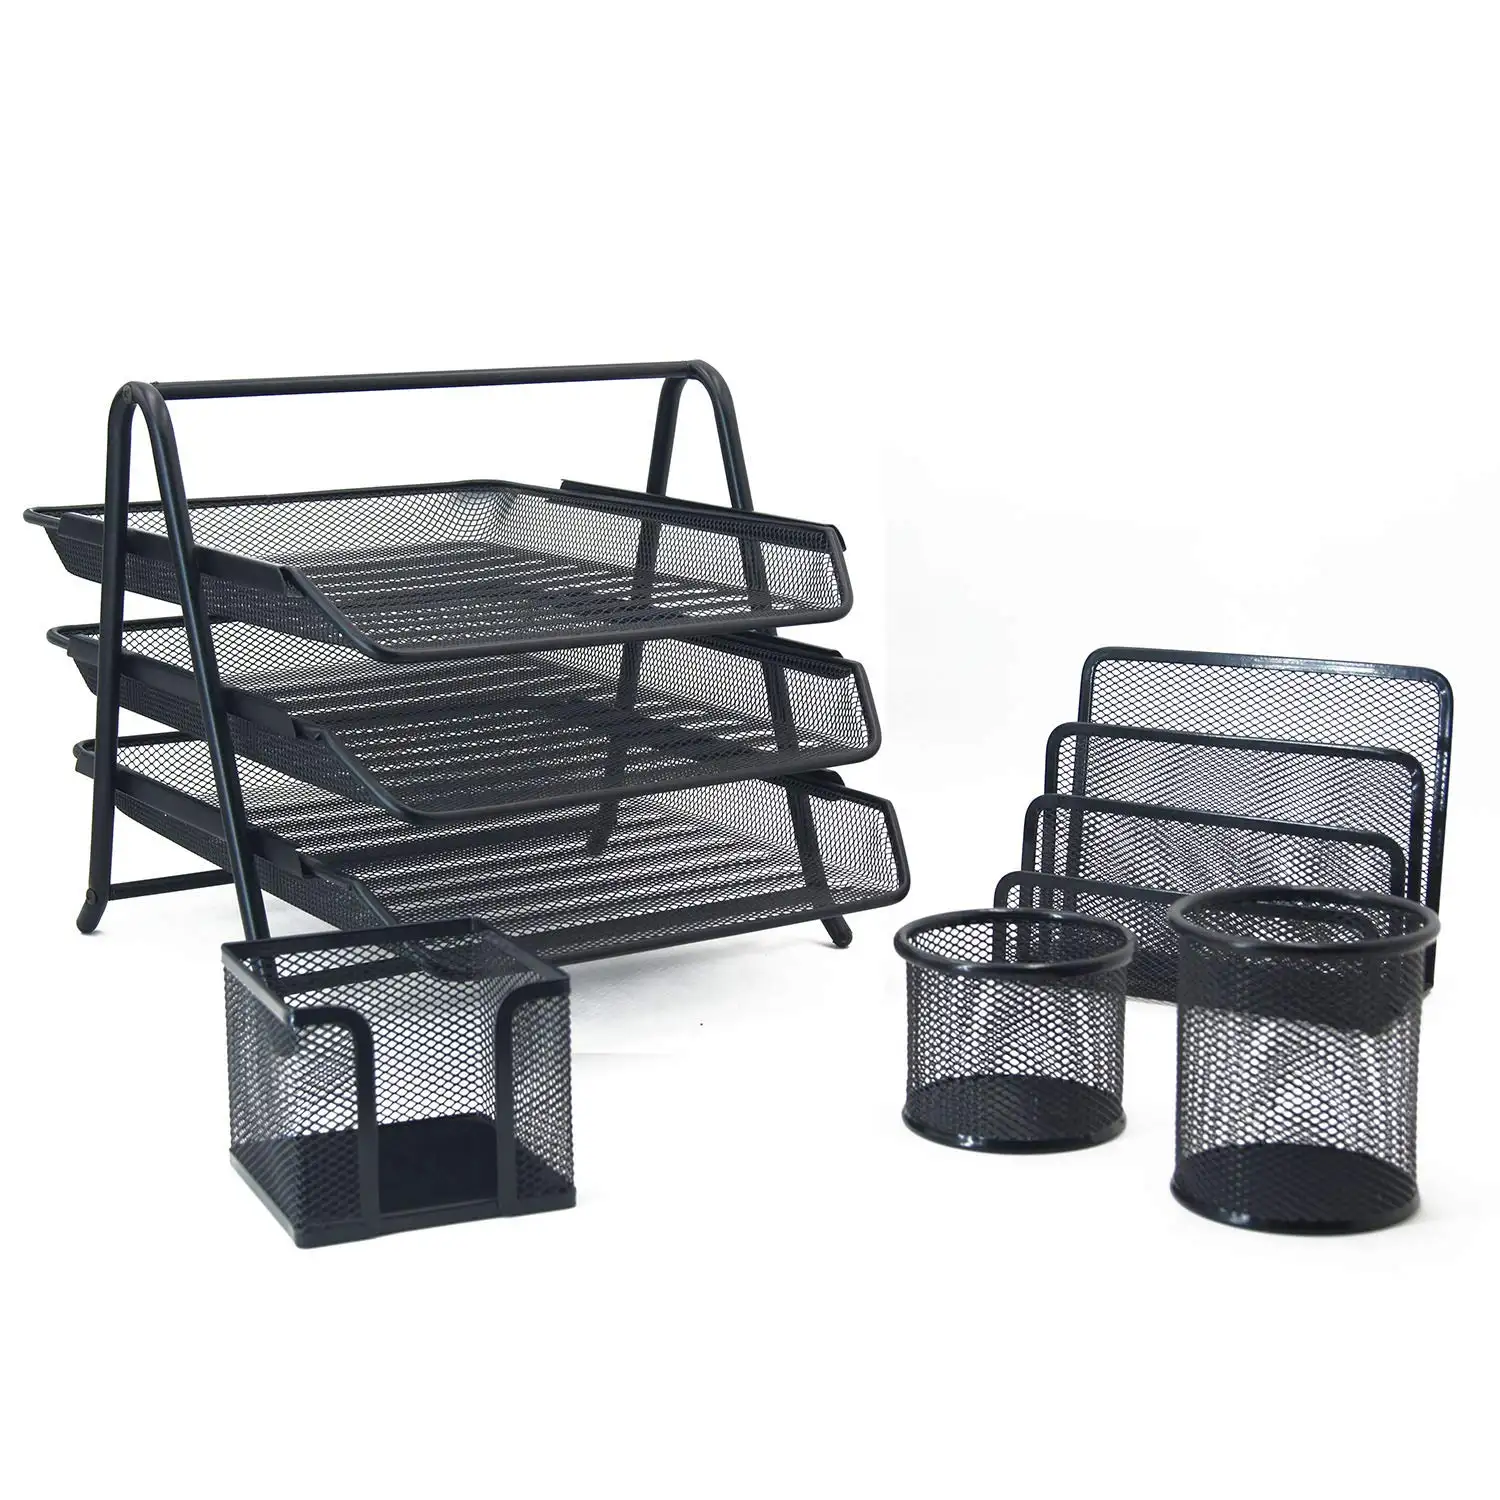 Best Selling hot Wideny powder coated school office organizer stationery mesh metal wire steel 5pcs file tray desk set